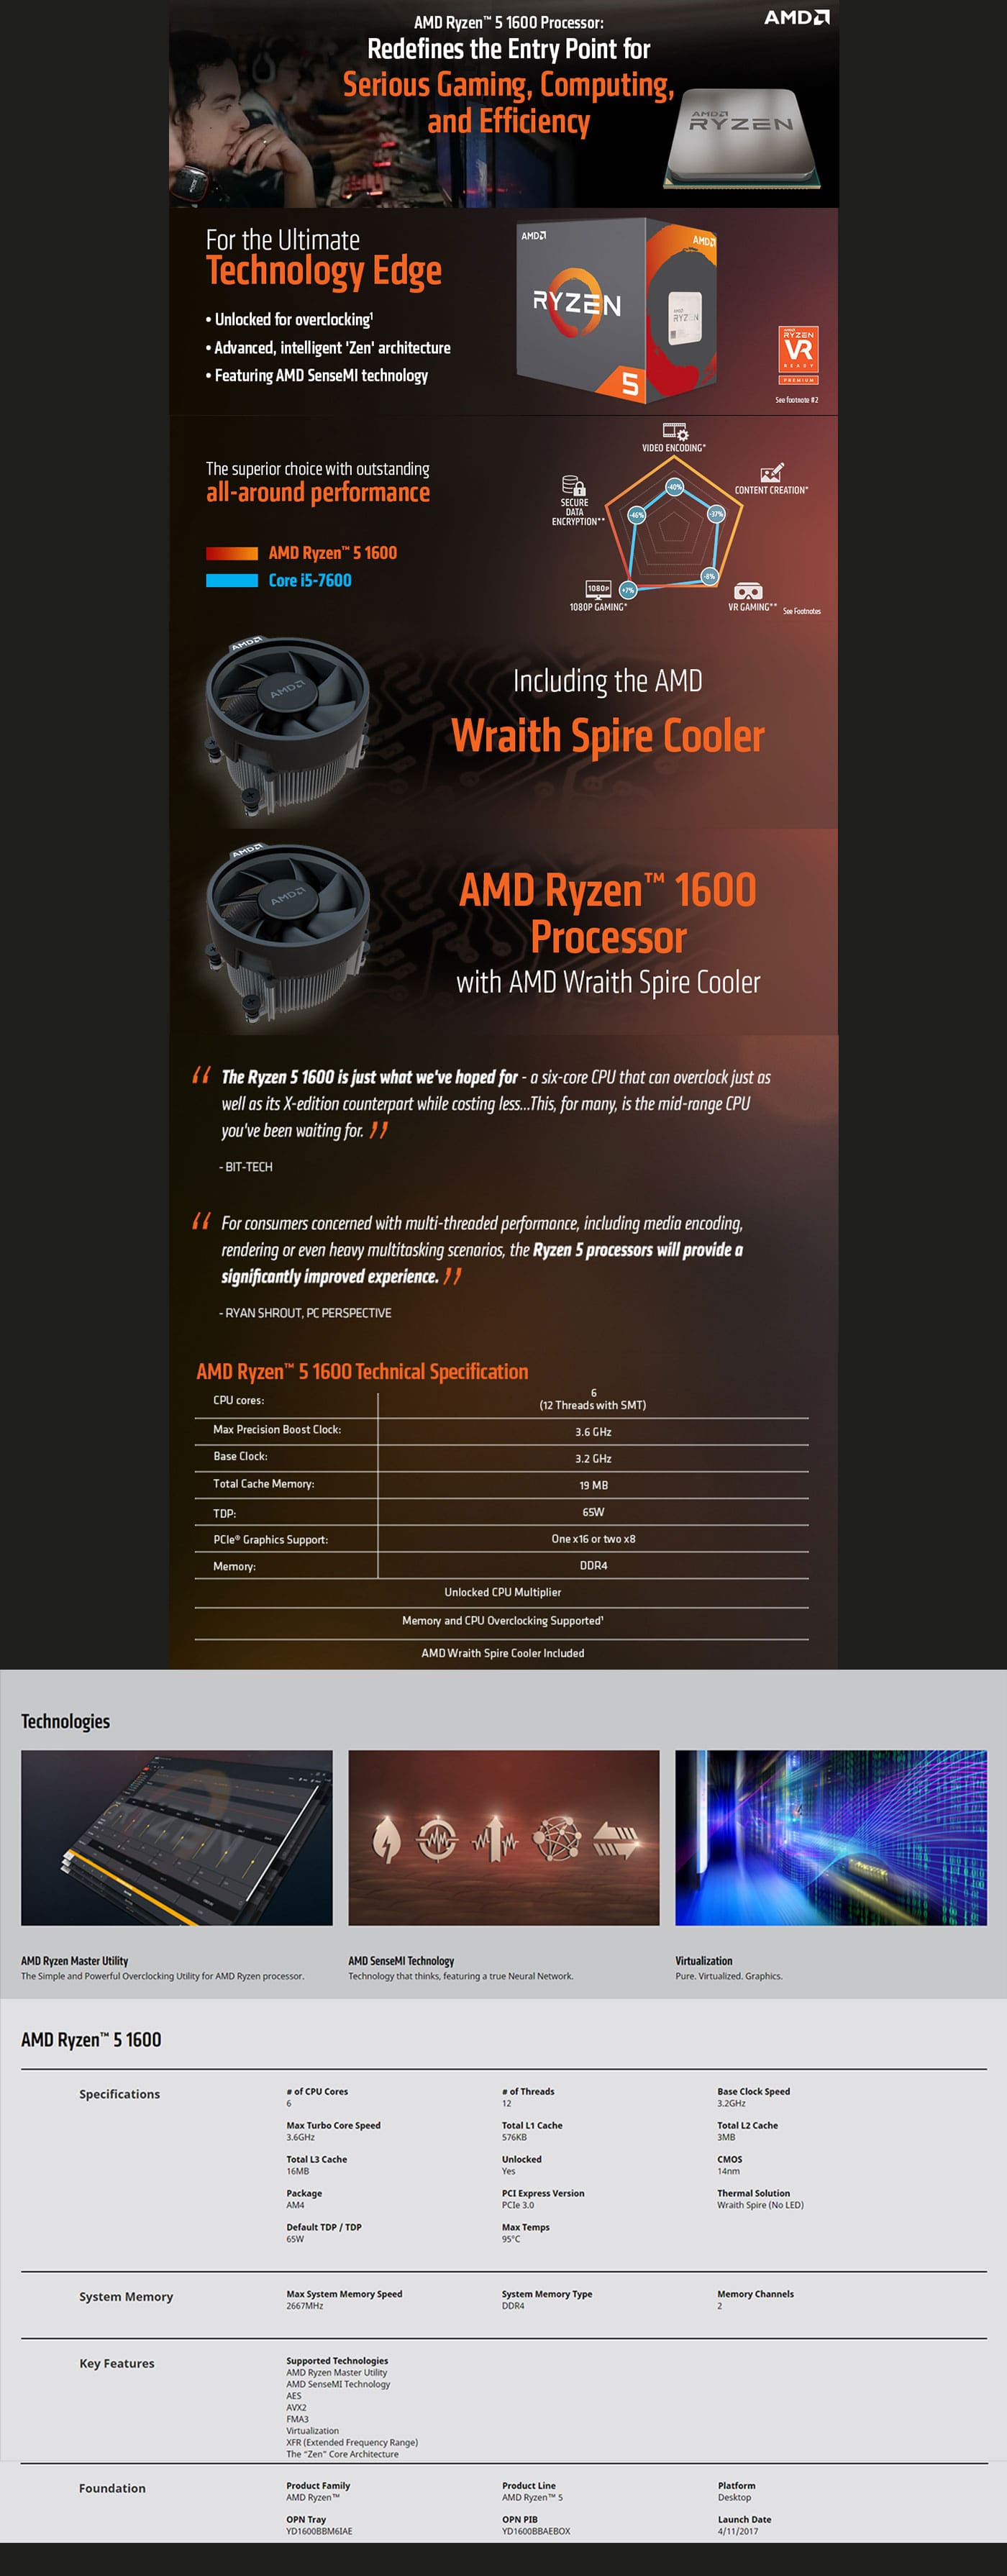 AMD Ryzen 5 1600 3.2 GHz Processor features